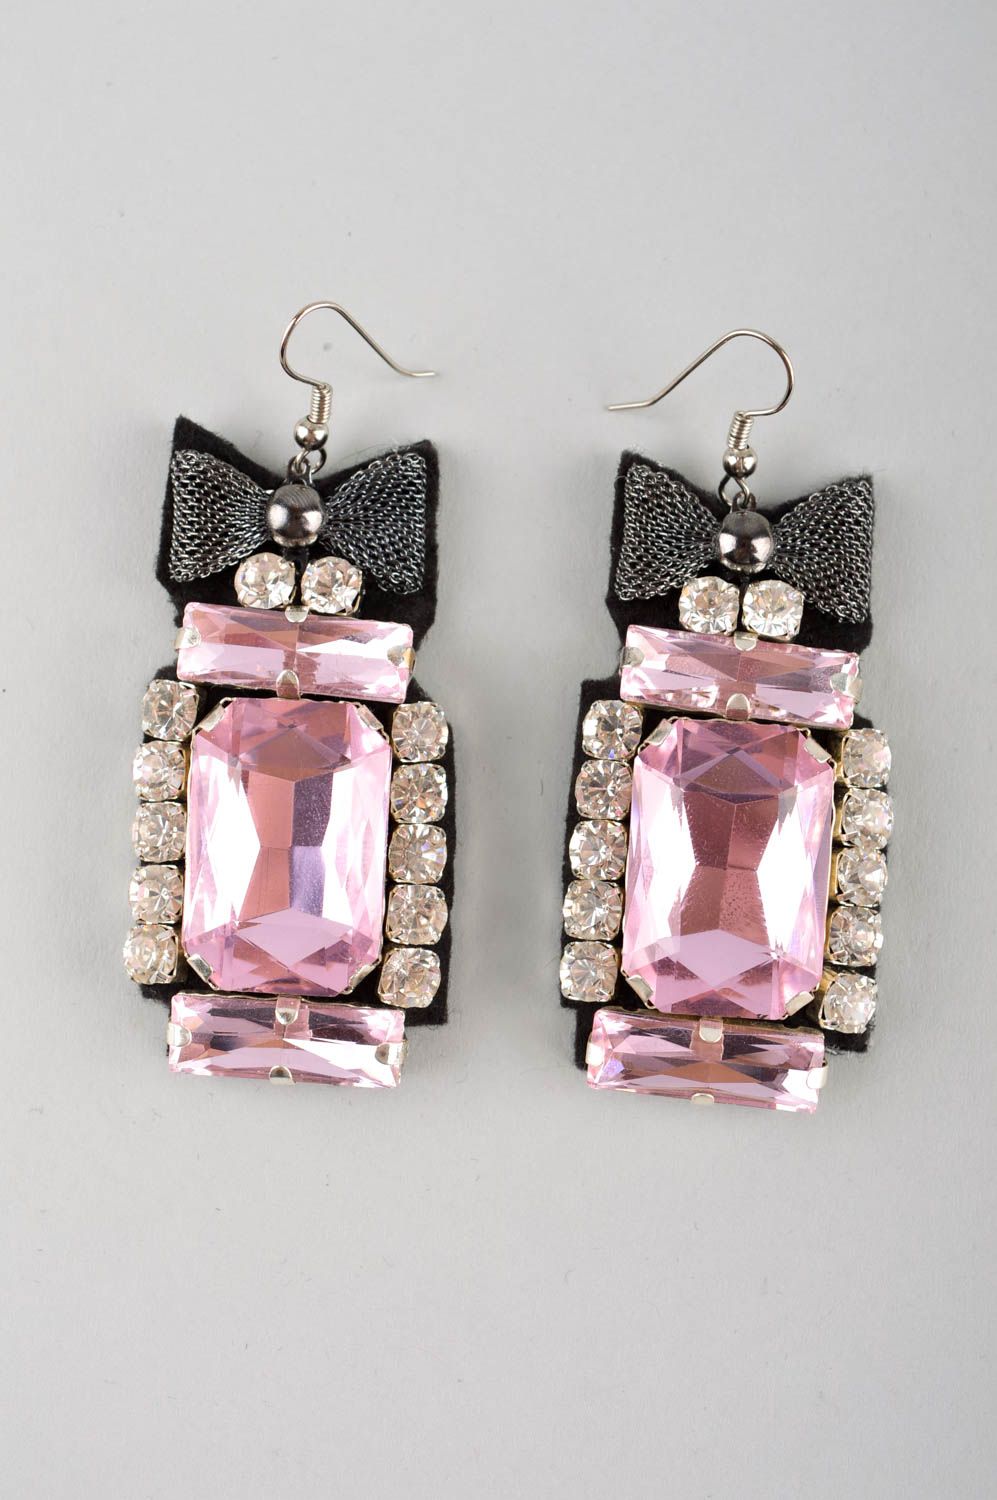 Crystal earrings designer earrings handmade jewelry evening earrings for women photo 3